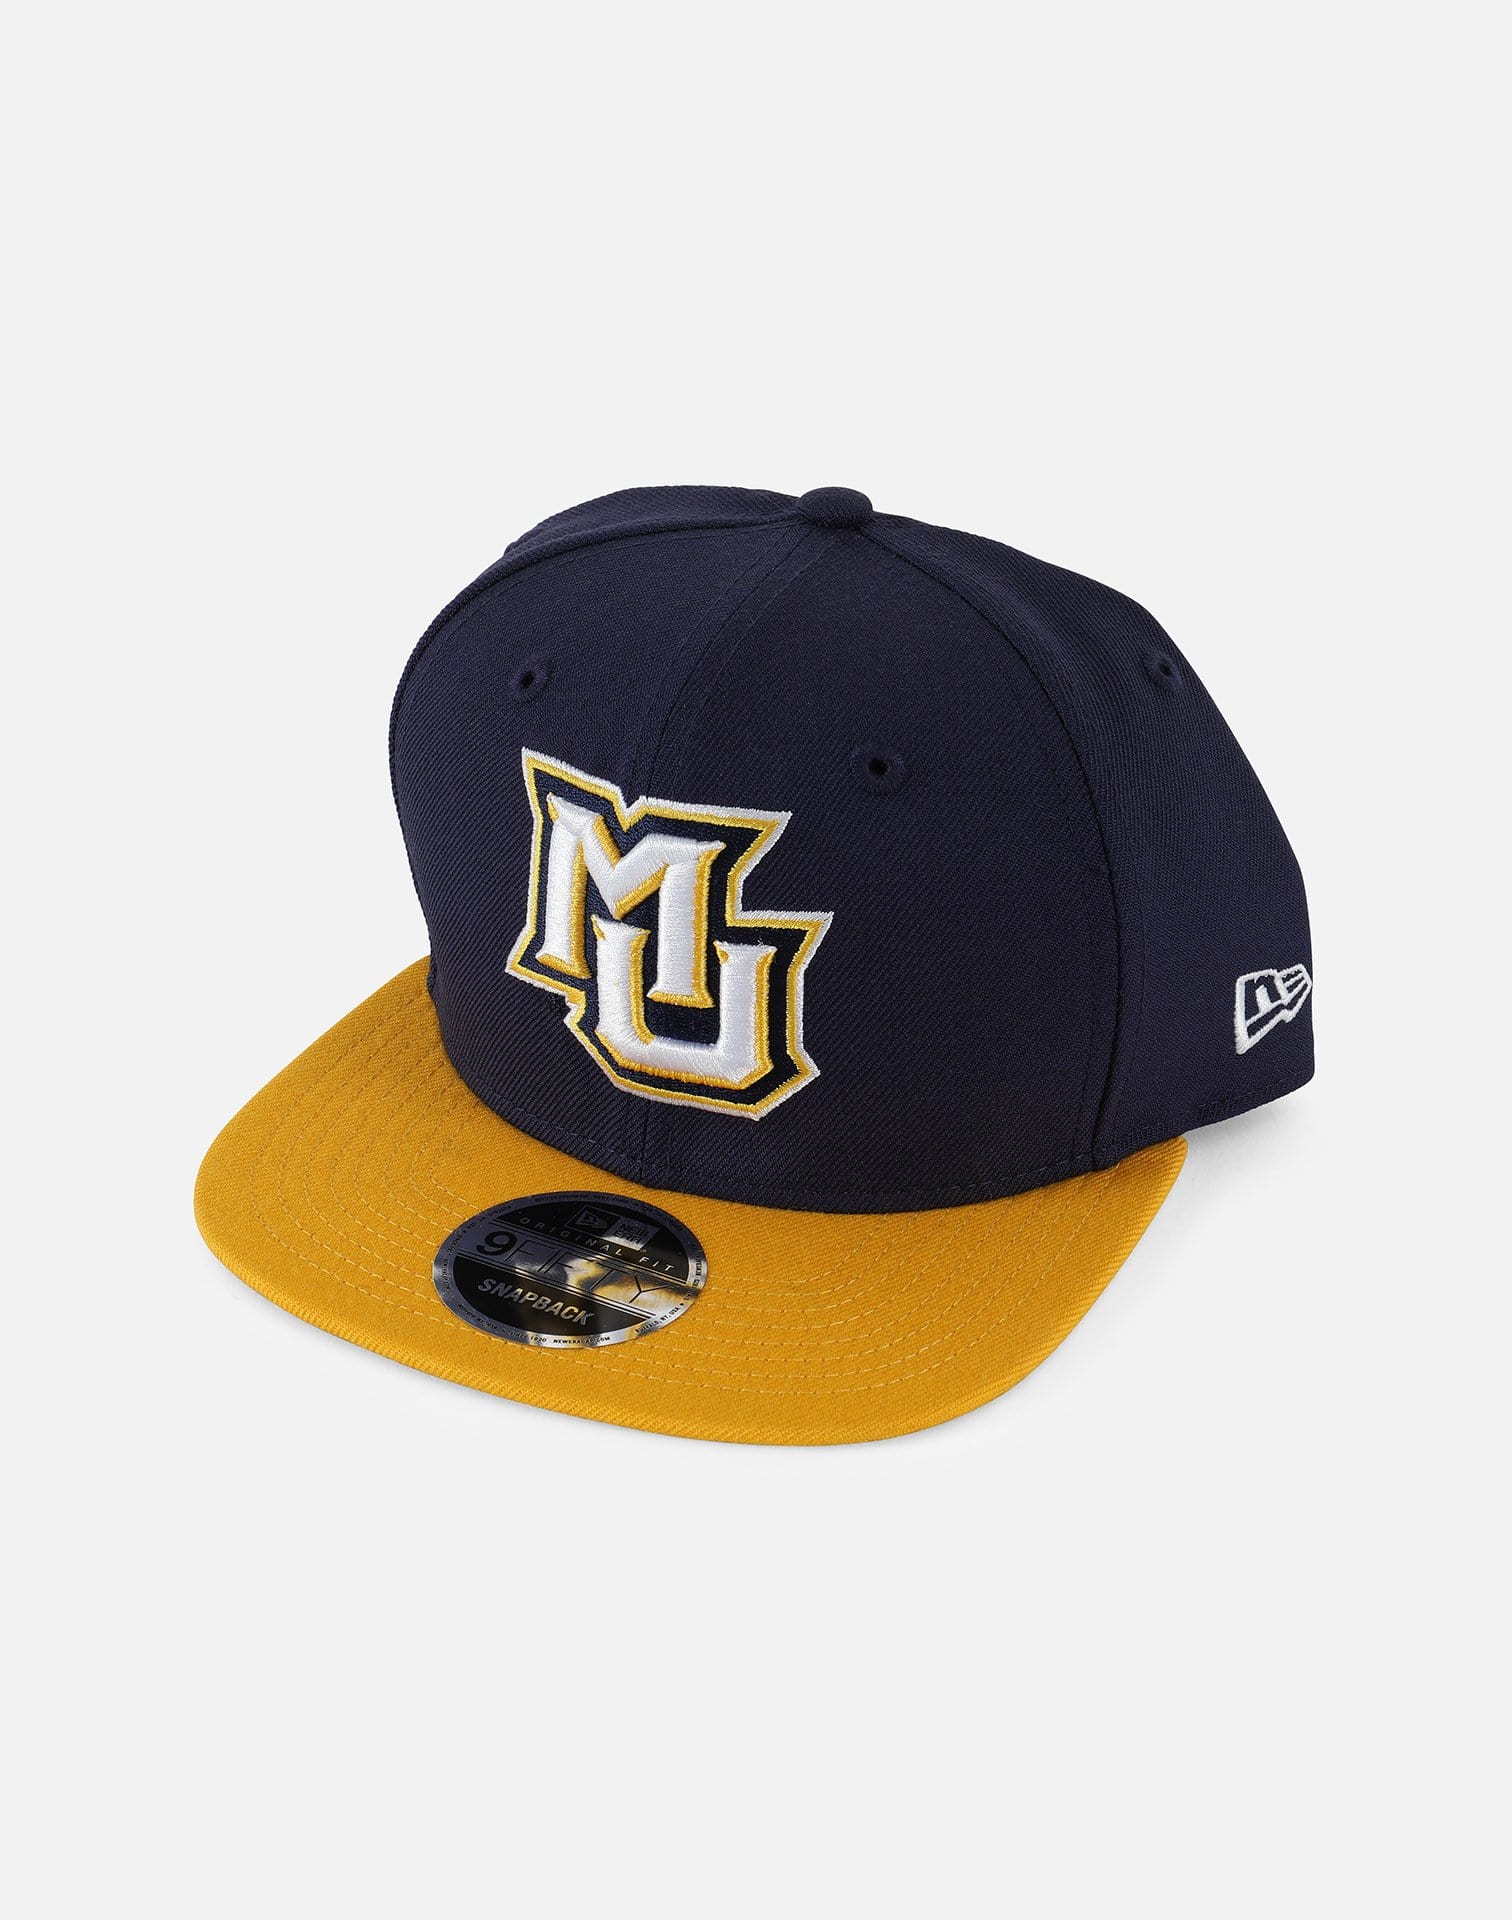 New Era 9FIFTY Marquette University Snapback Hat